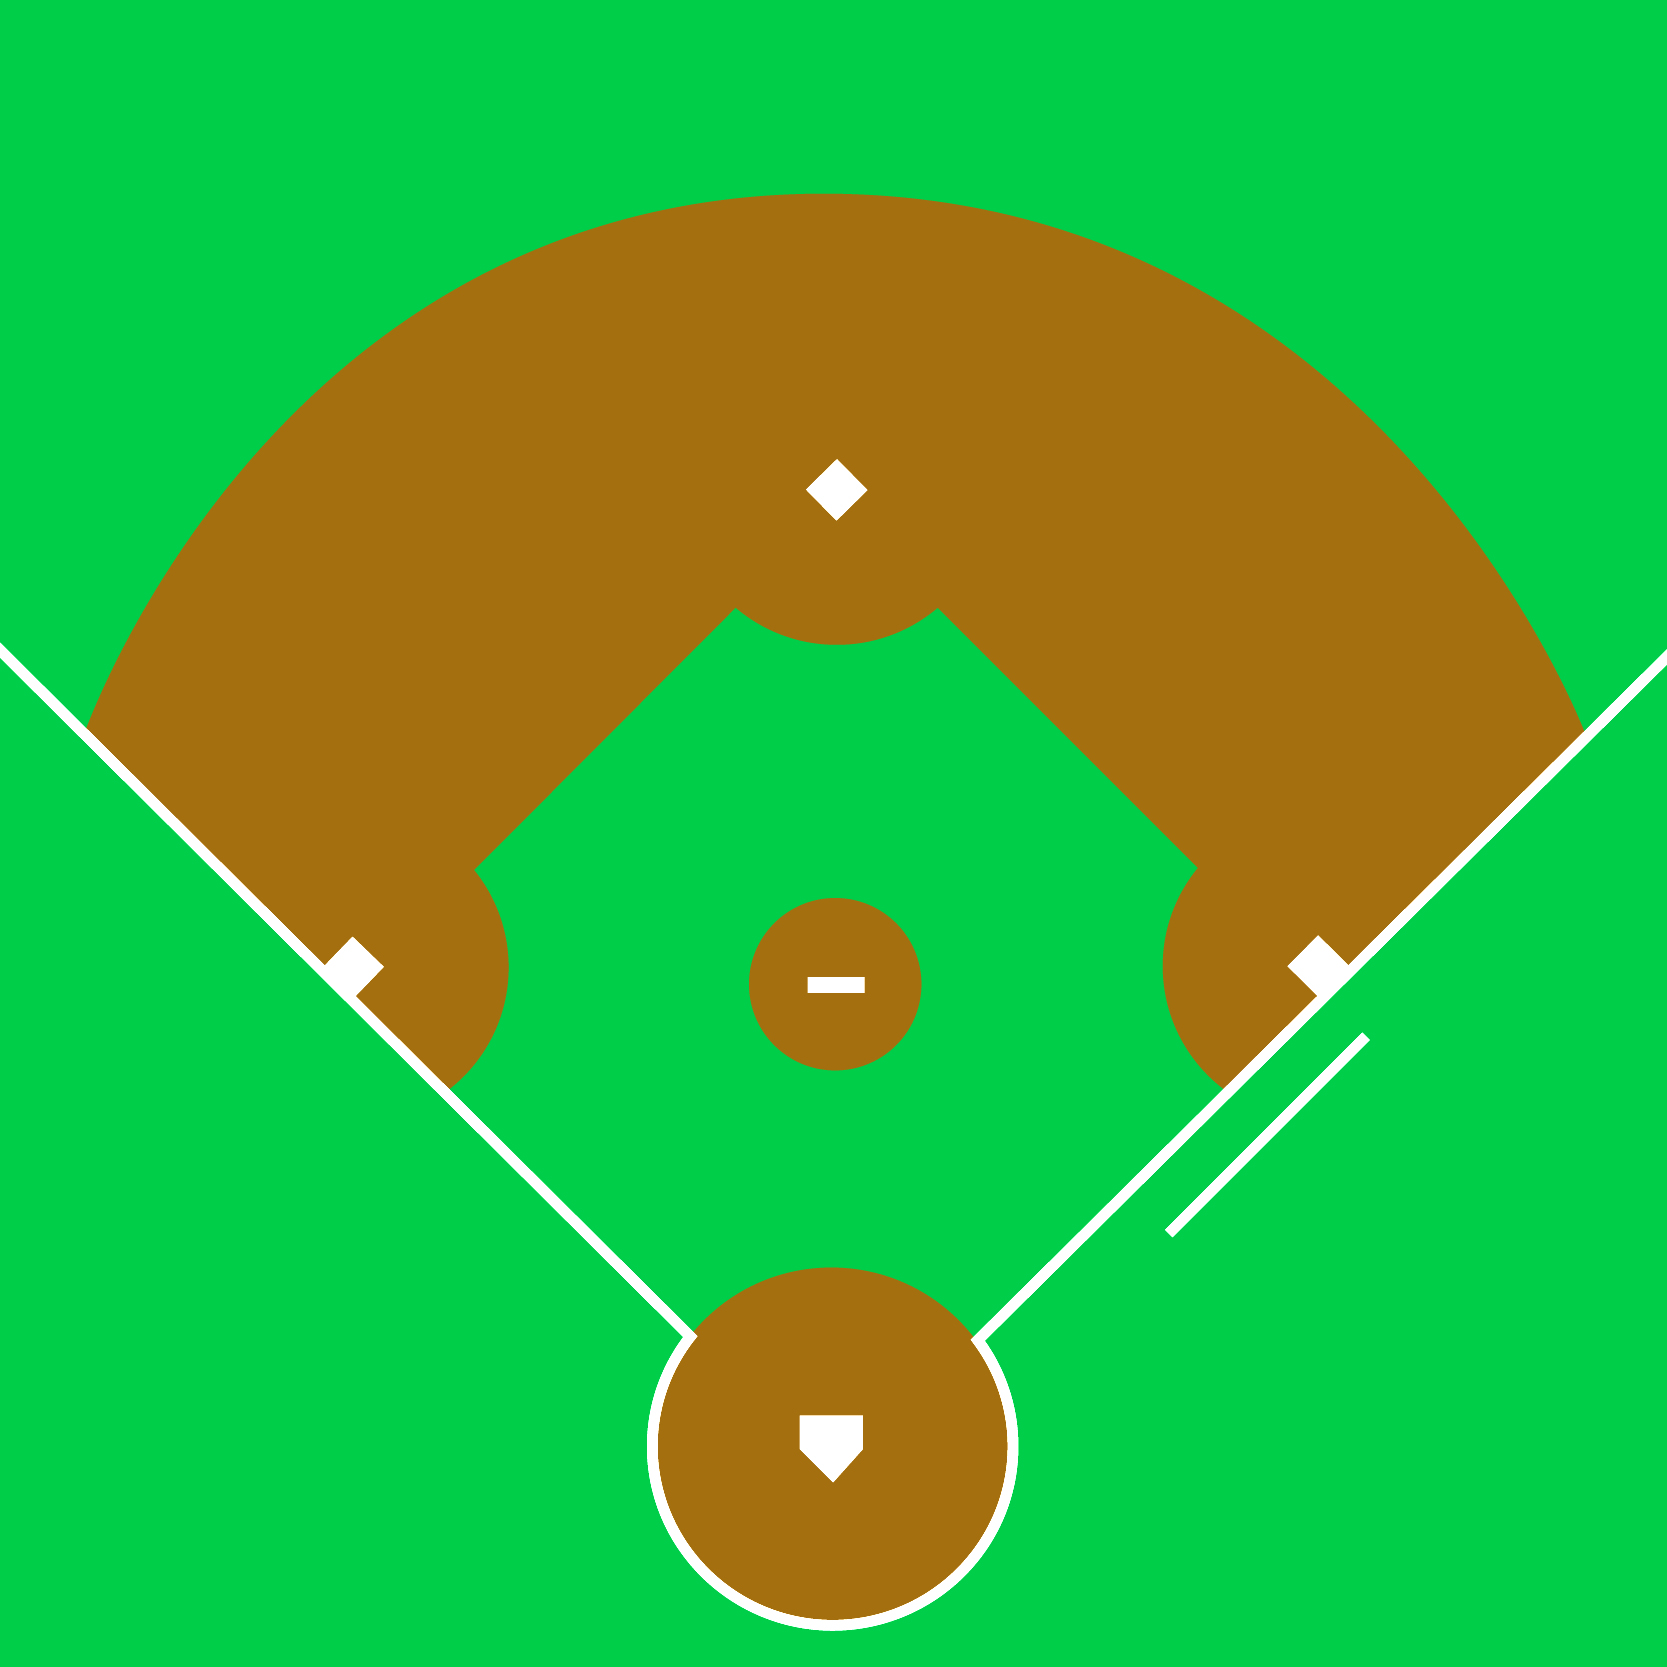 Baseball Diamond Vector